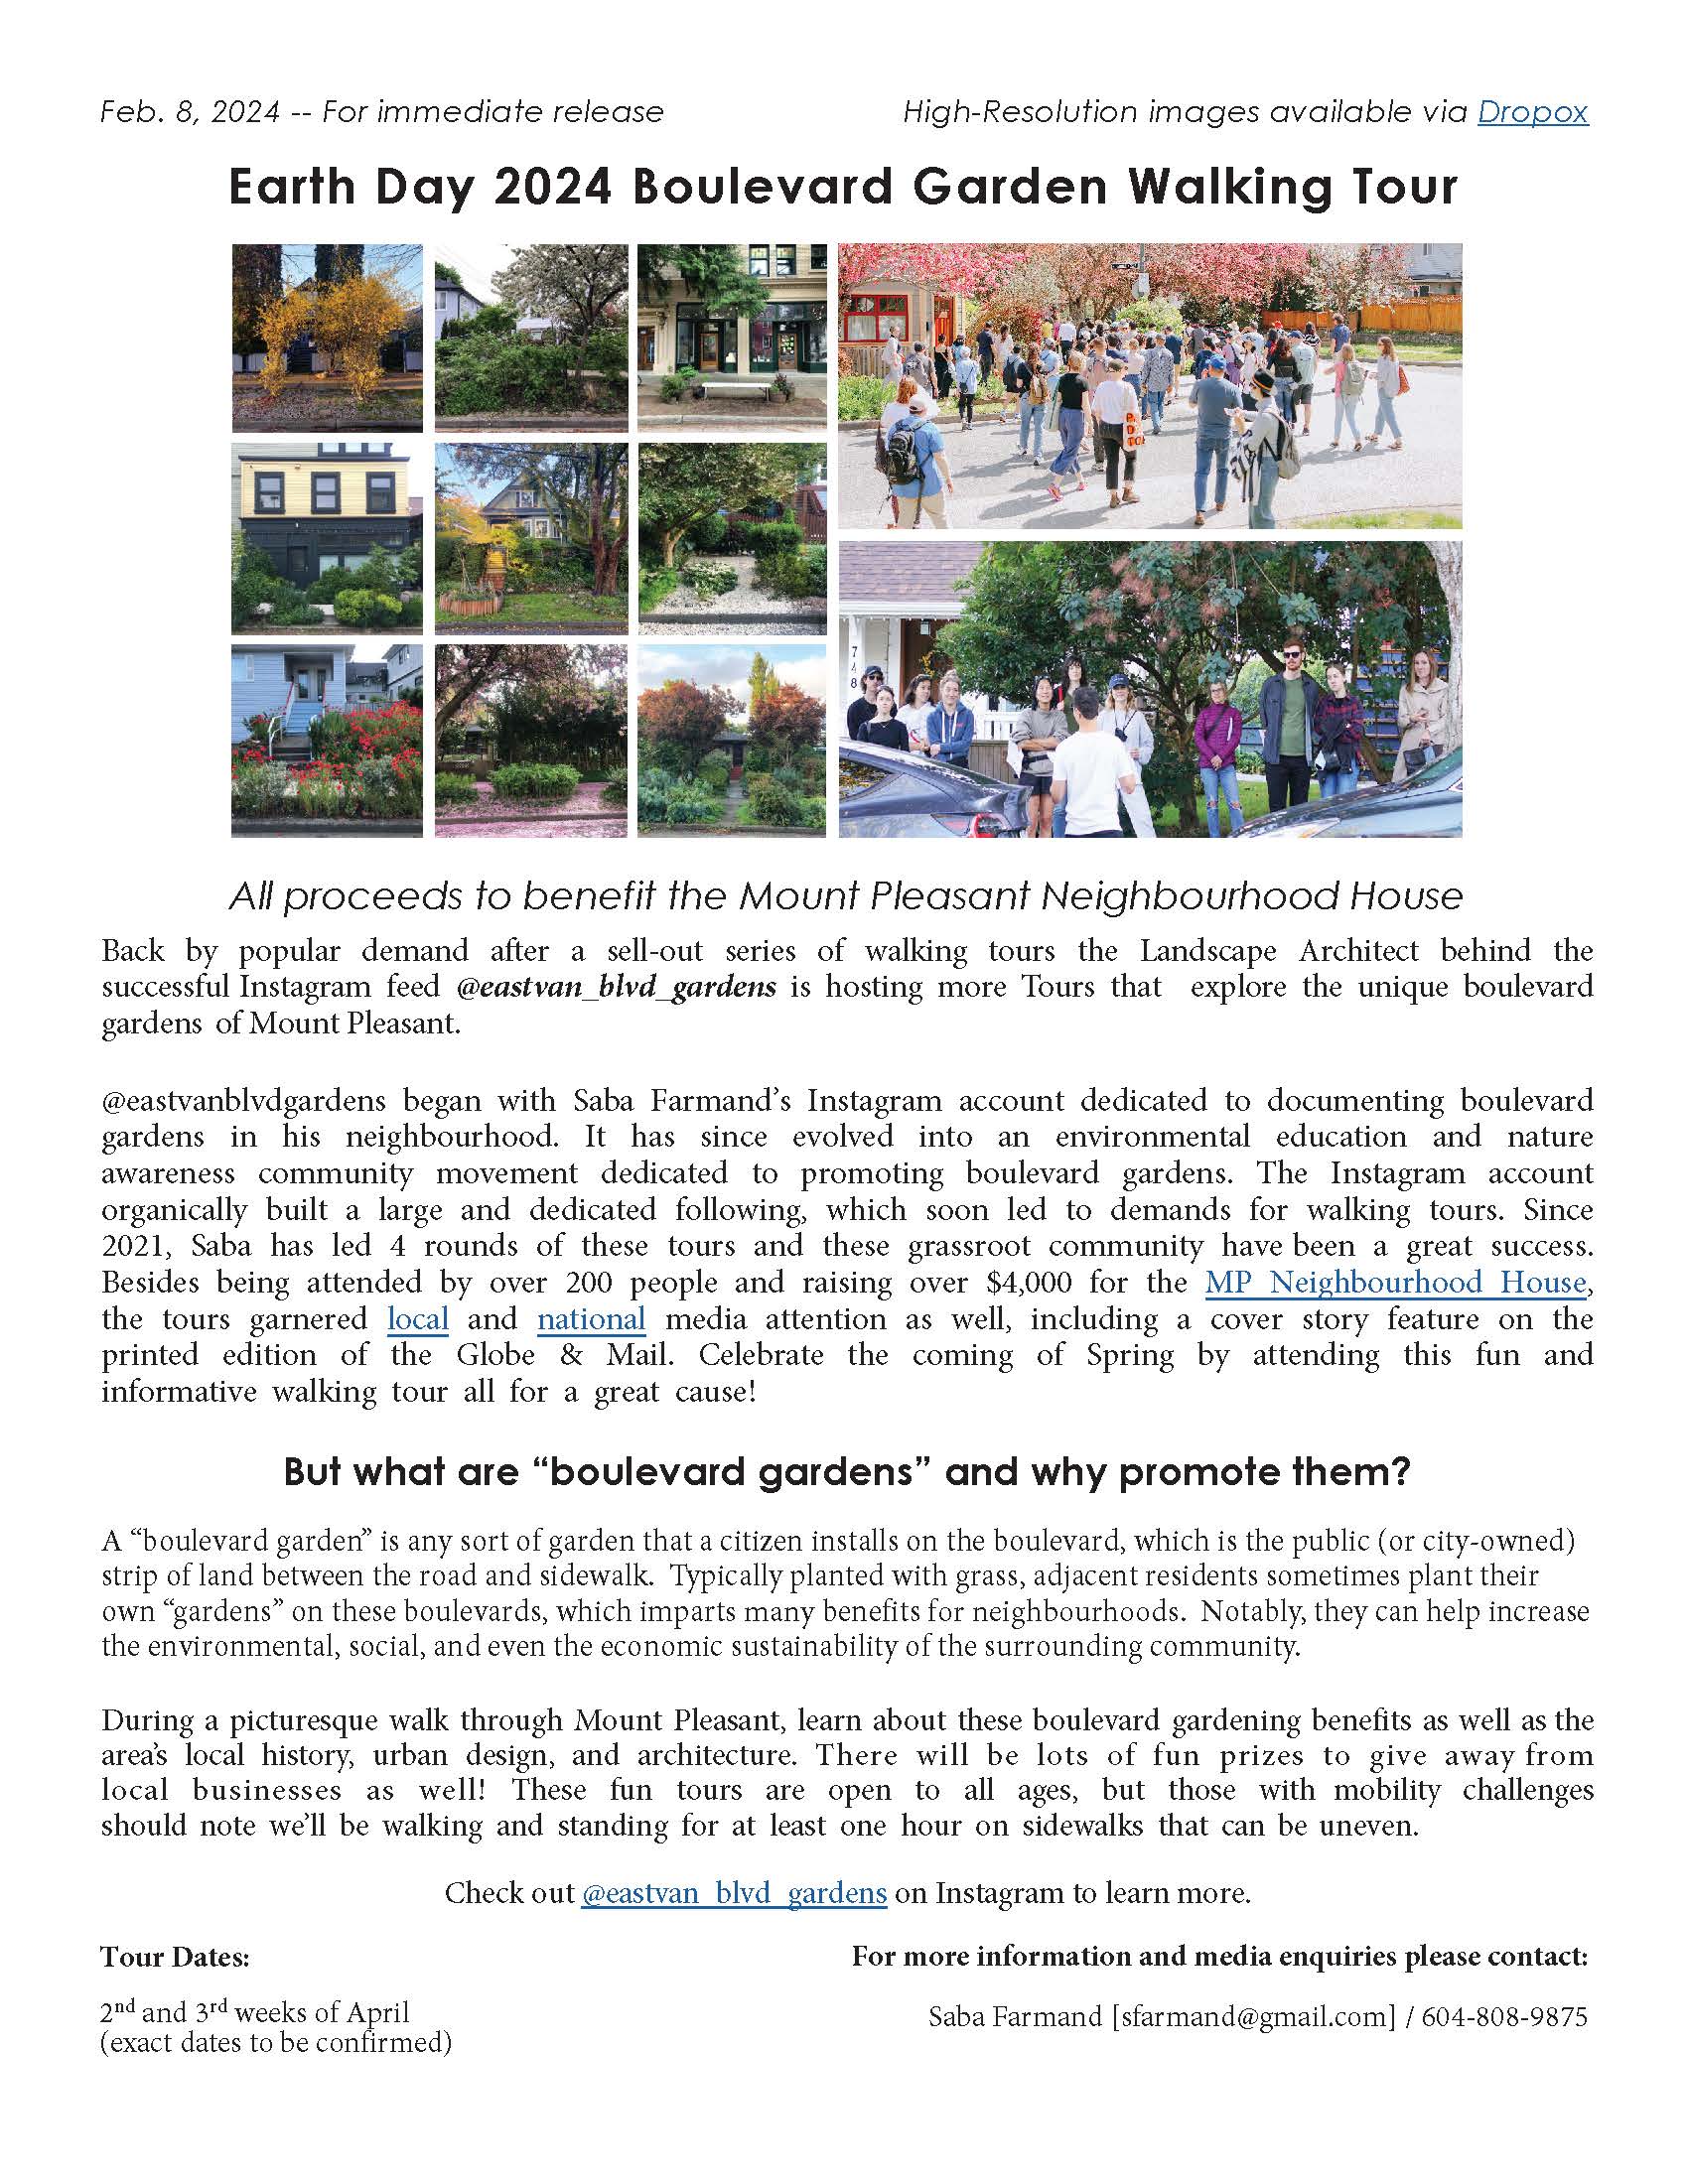 Brochure for Earth Day 2024 Boulevard Garden Walking Tour 